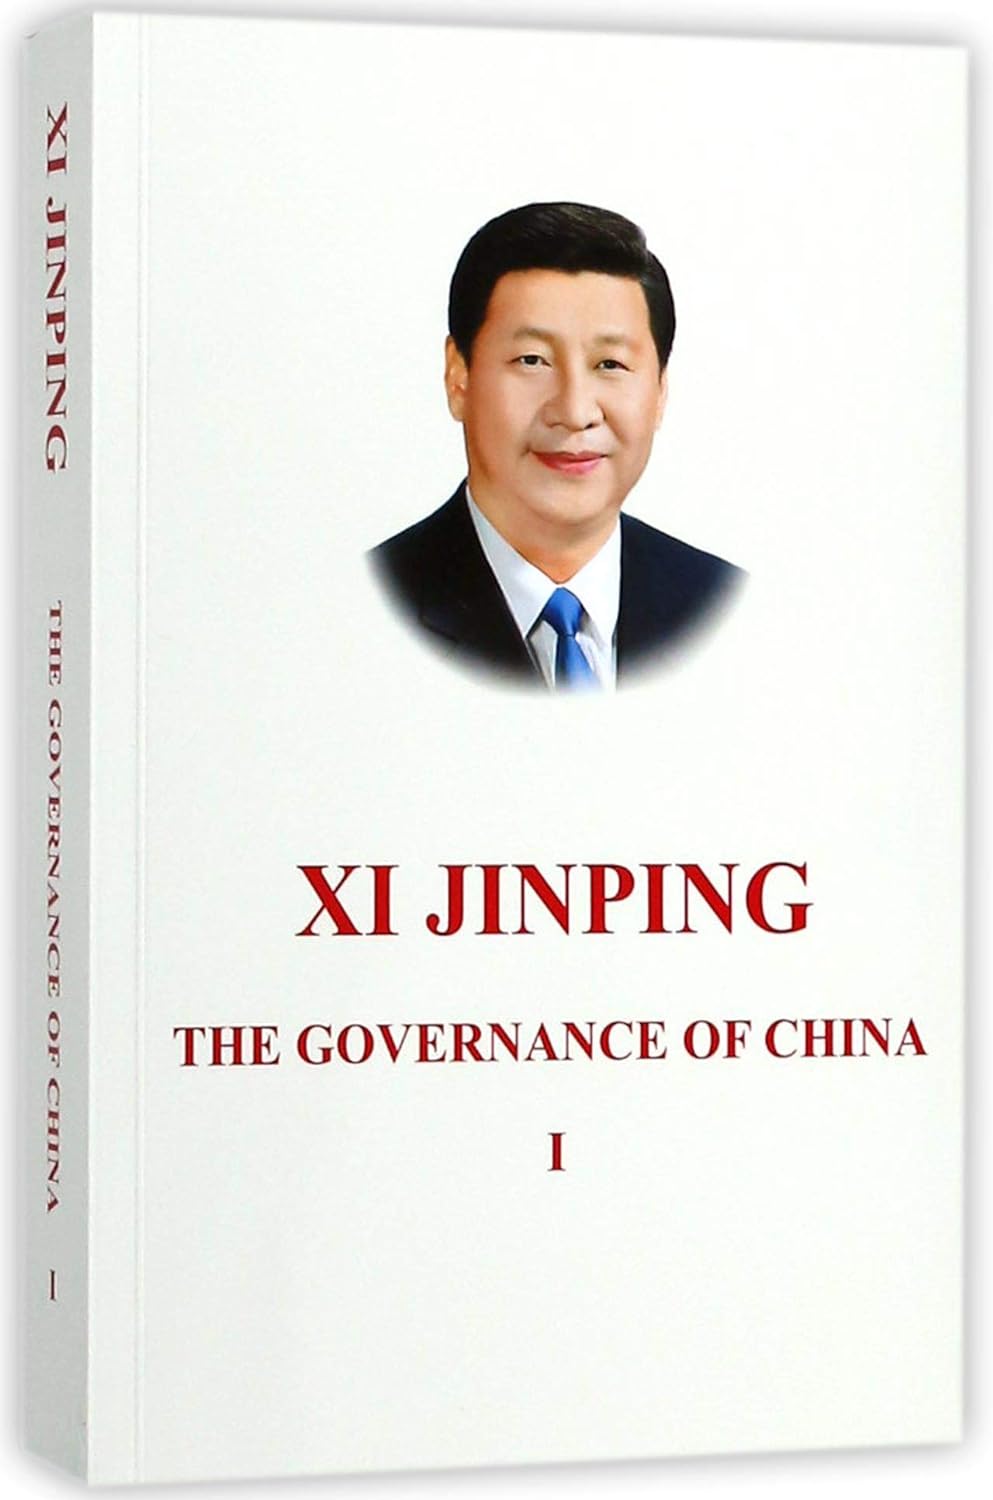 Xi Jinping: The Governance of China Vol. 1 (English) - Paperback